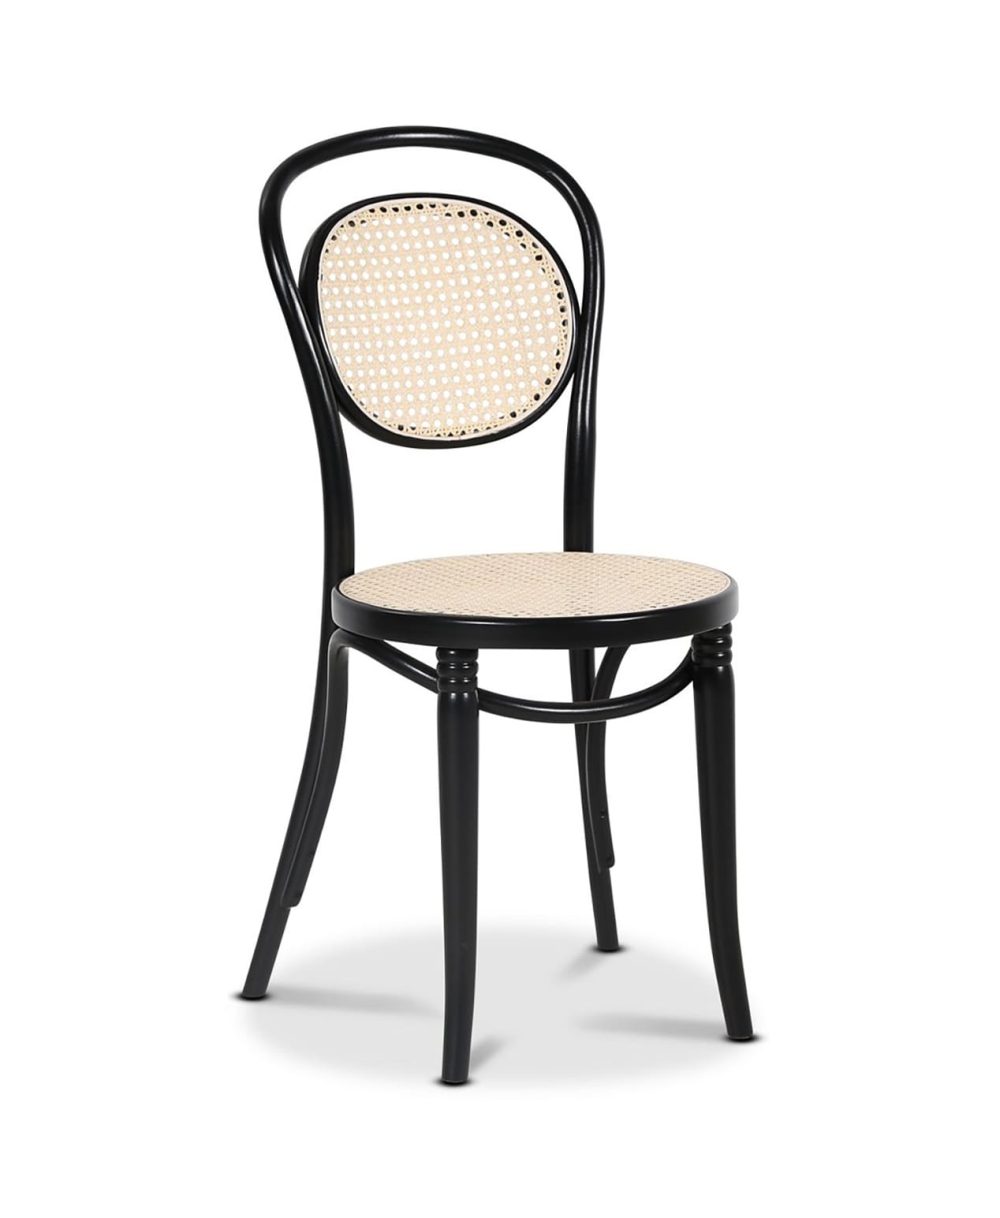 curved-no10-chair-black-profile.jpg